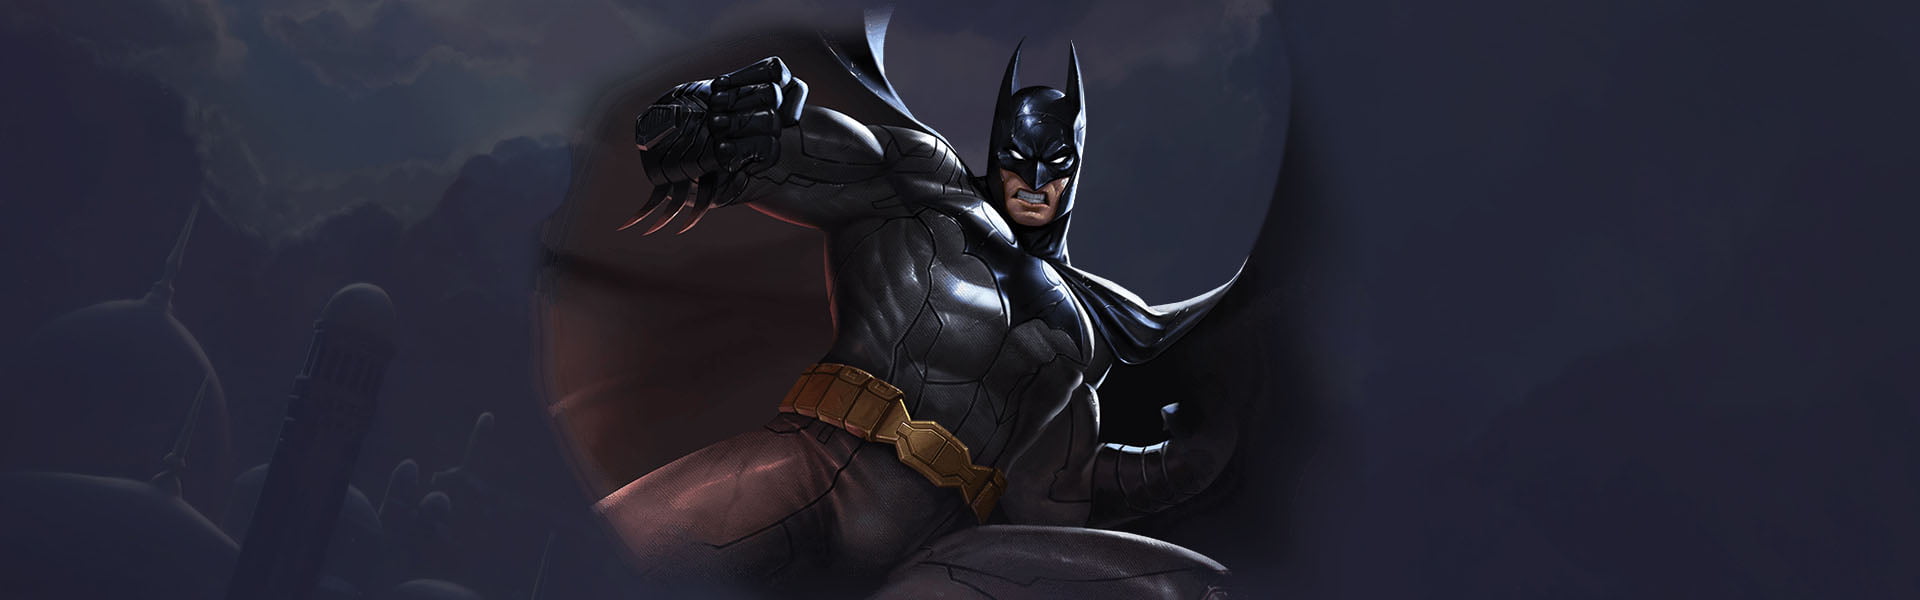 Batman Revealed As Free Hero in Arena of Valor 18